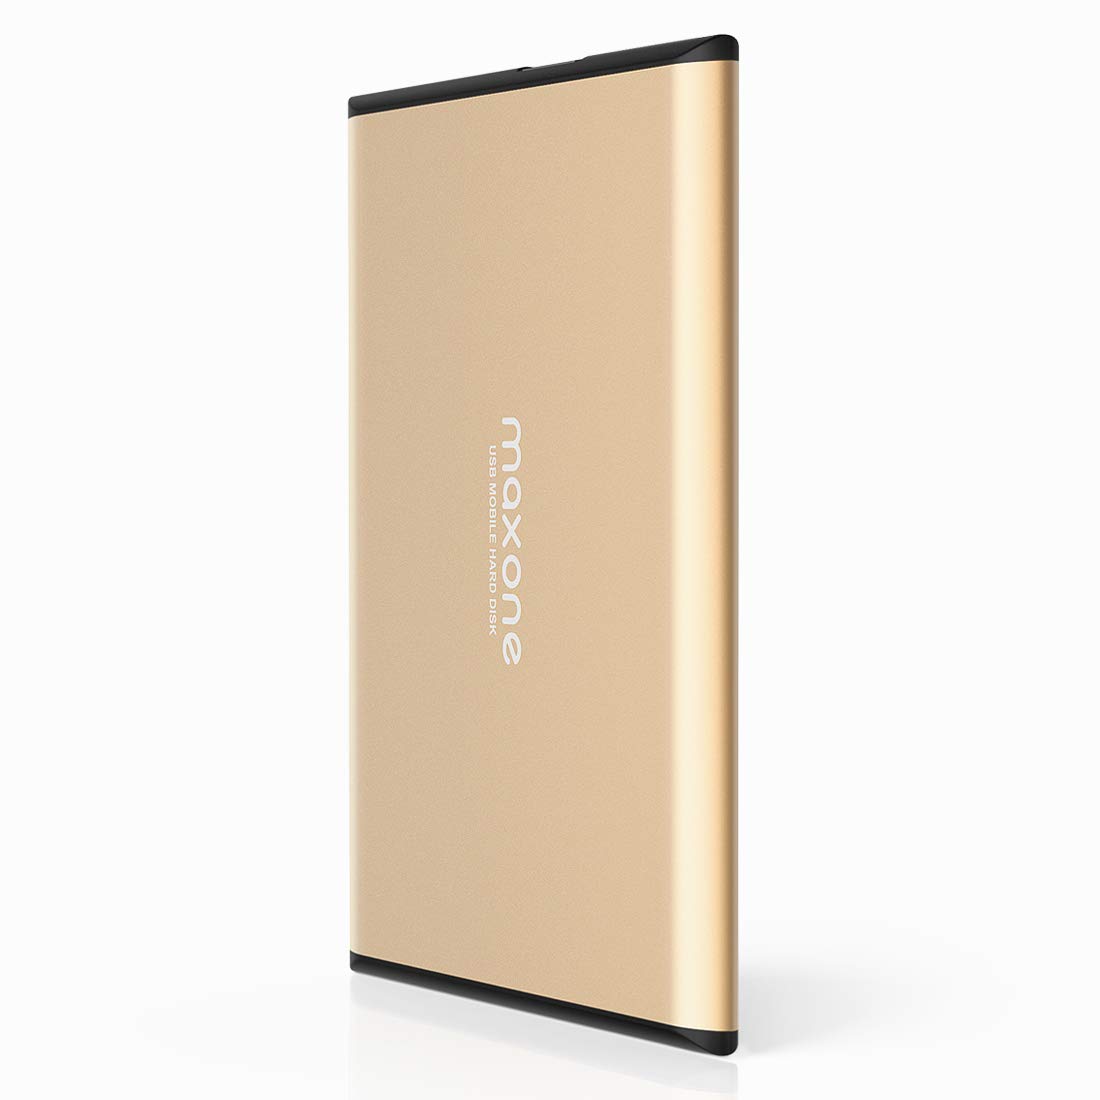 1TB Portable External Hard Drive - Maxone Ultra Slim 2.5'' External HDD USB 3.0 for PC, Mac, Laptop, PS4, Xbox one - Gold